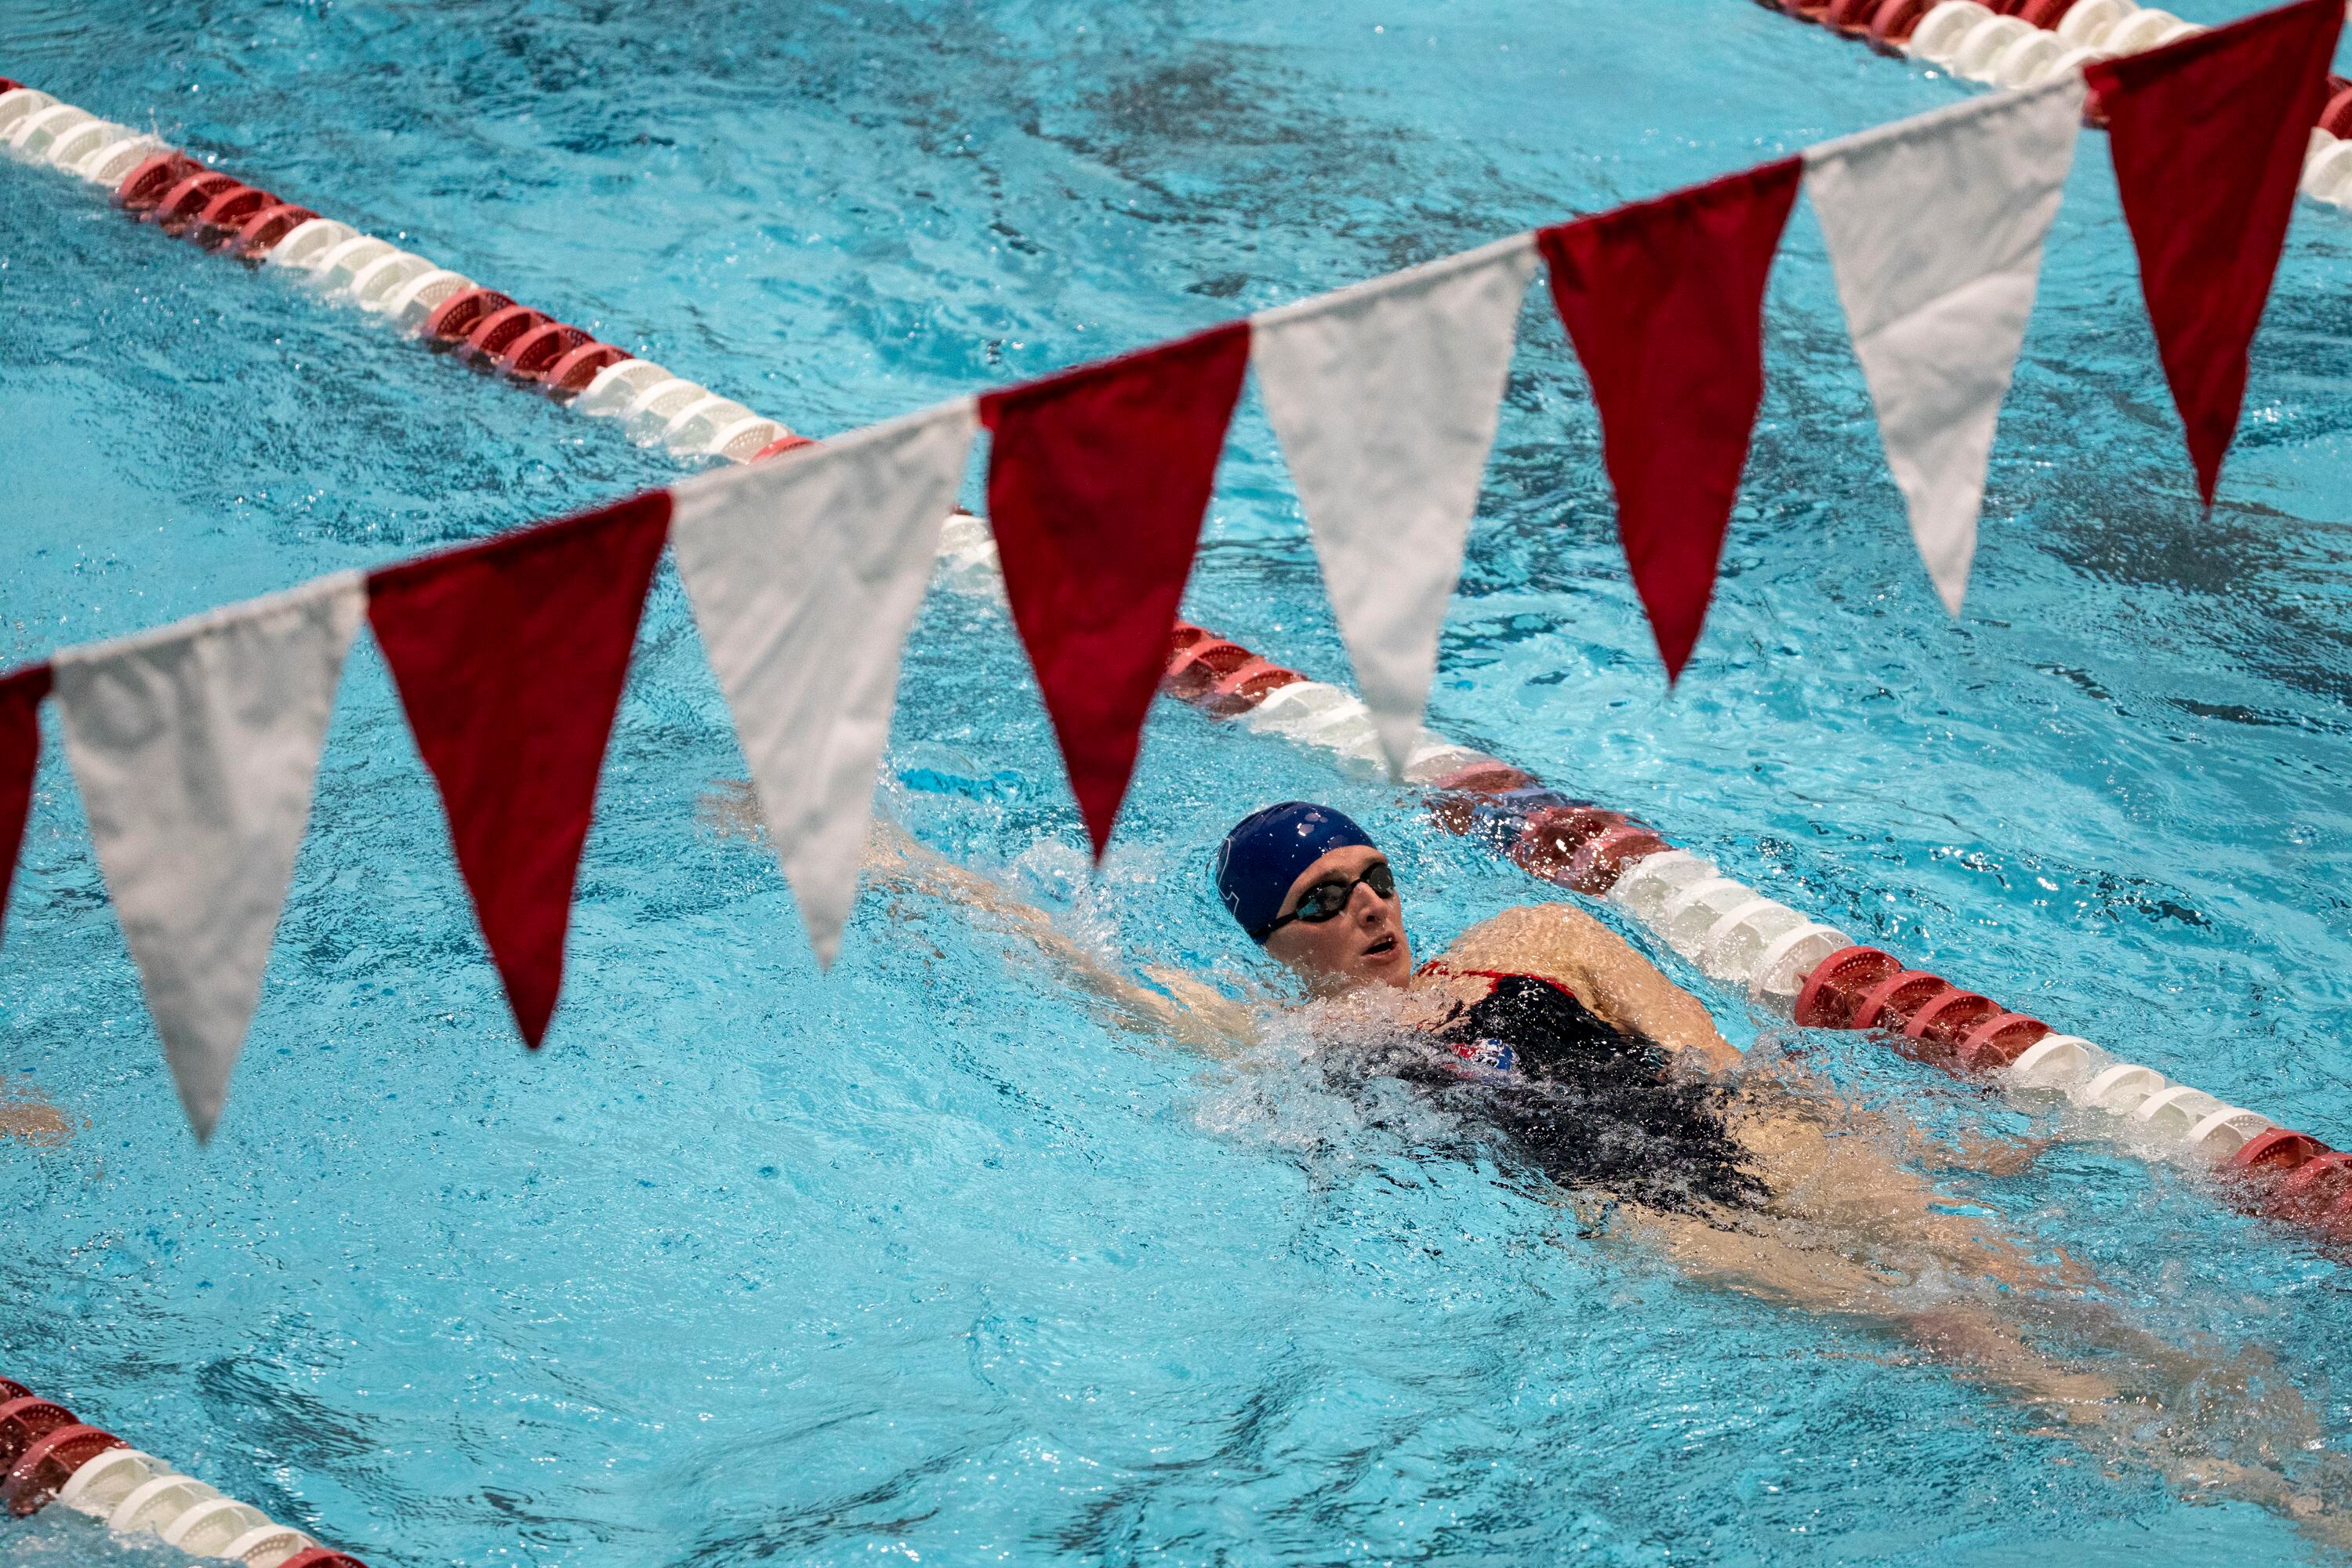 Transgender male swimmer struggling against new competition after